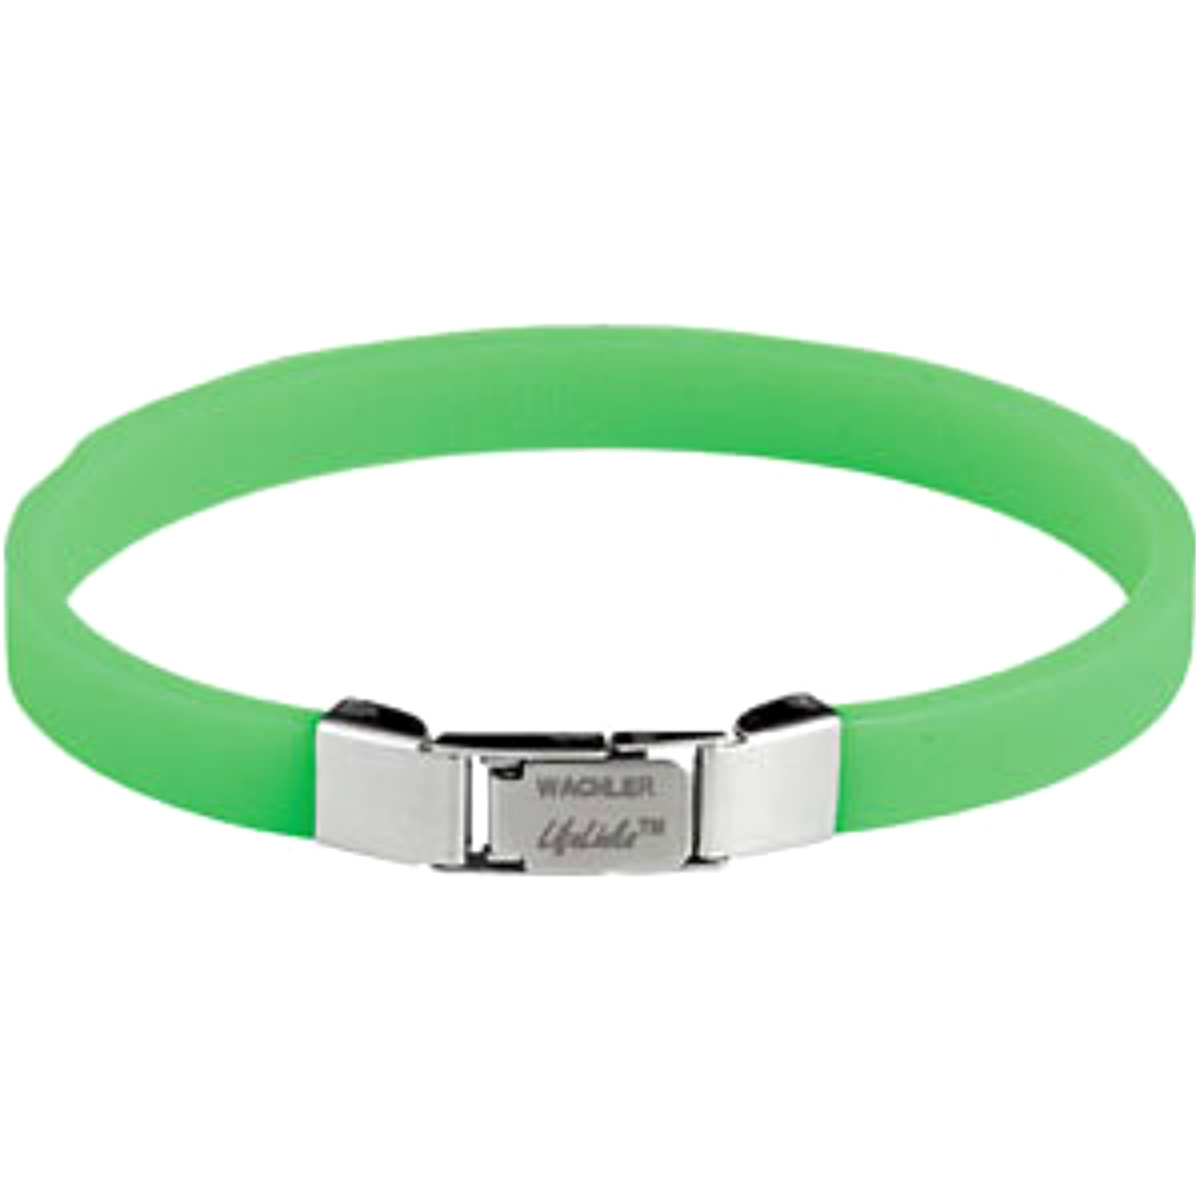 LifeLink Green Rubber Bracelet with Clasp